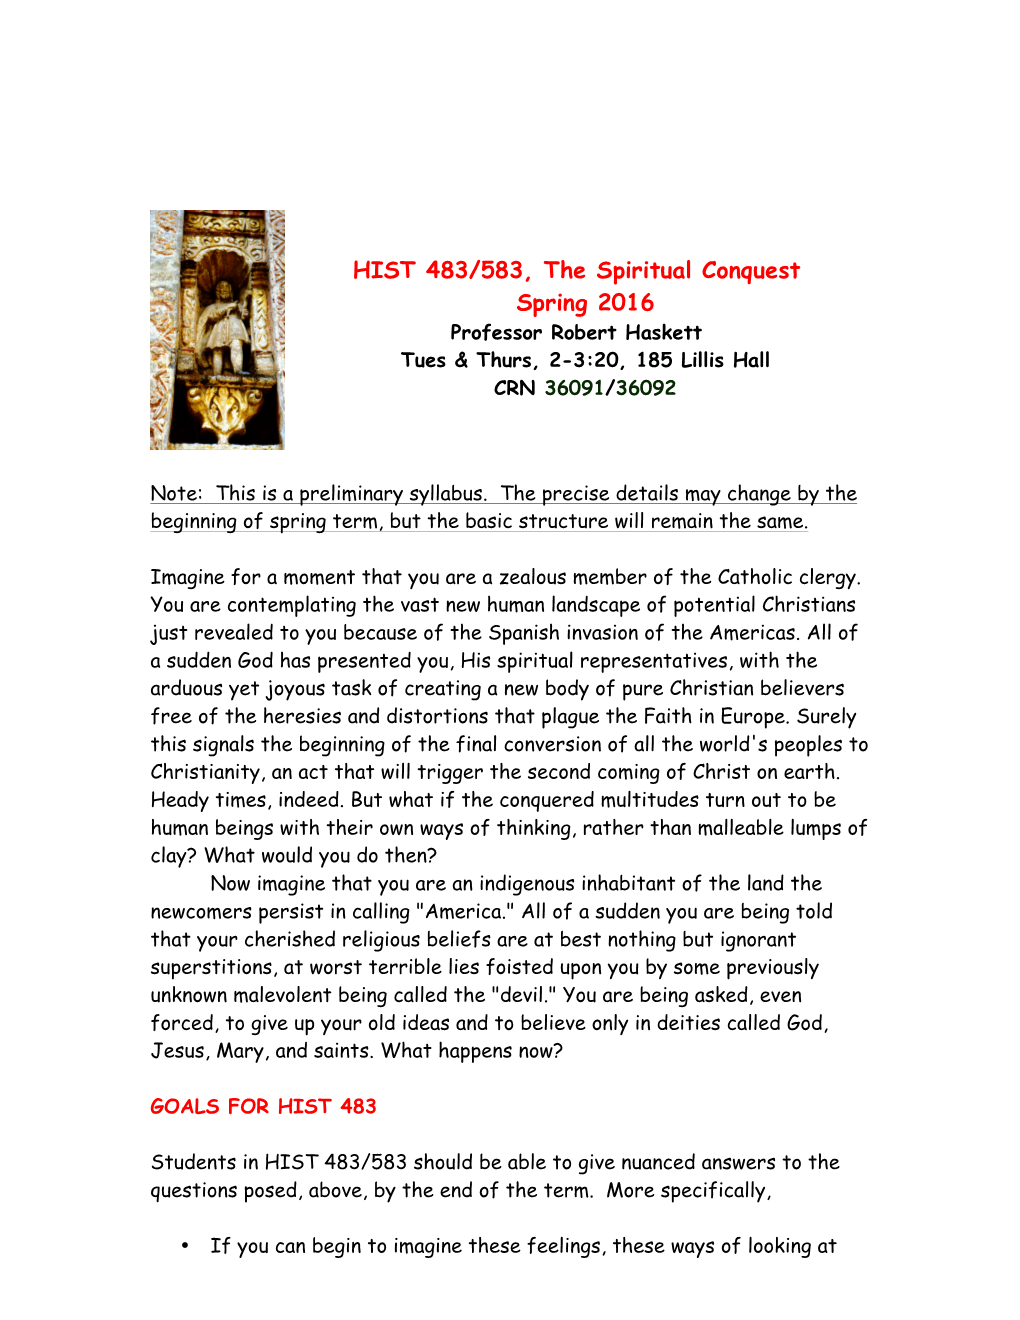 Spiritual Conquest Spring 2016 Professor Robert Haskett Tues & Thurs, 2-3:20, 185 Lillis Hall CRN 36091/36092